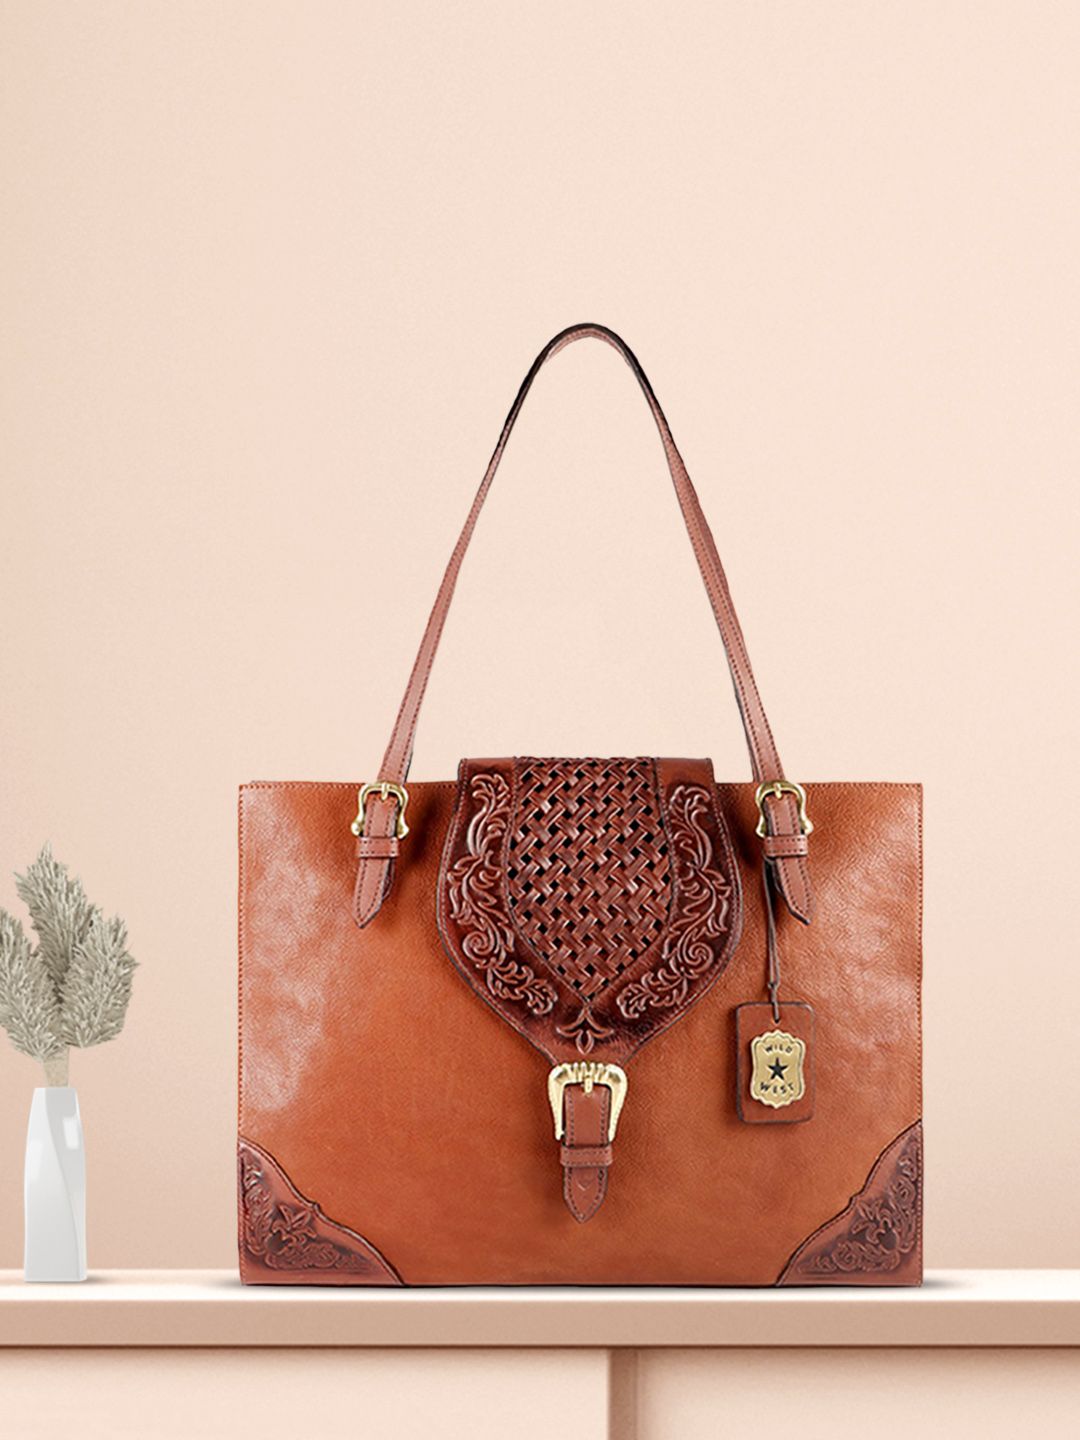 Hidesign Tan Brown Textured Leather Handheld Bag Price in India